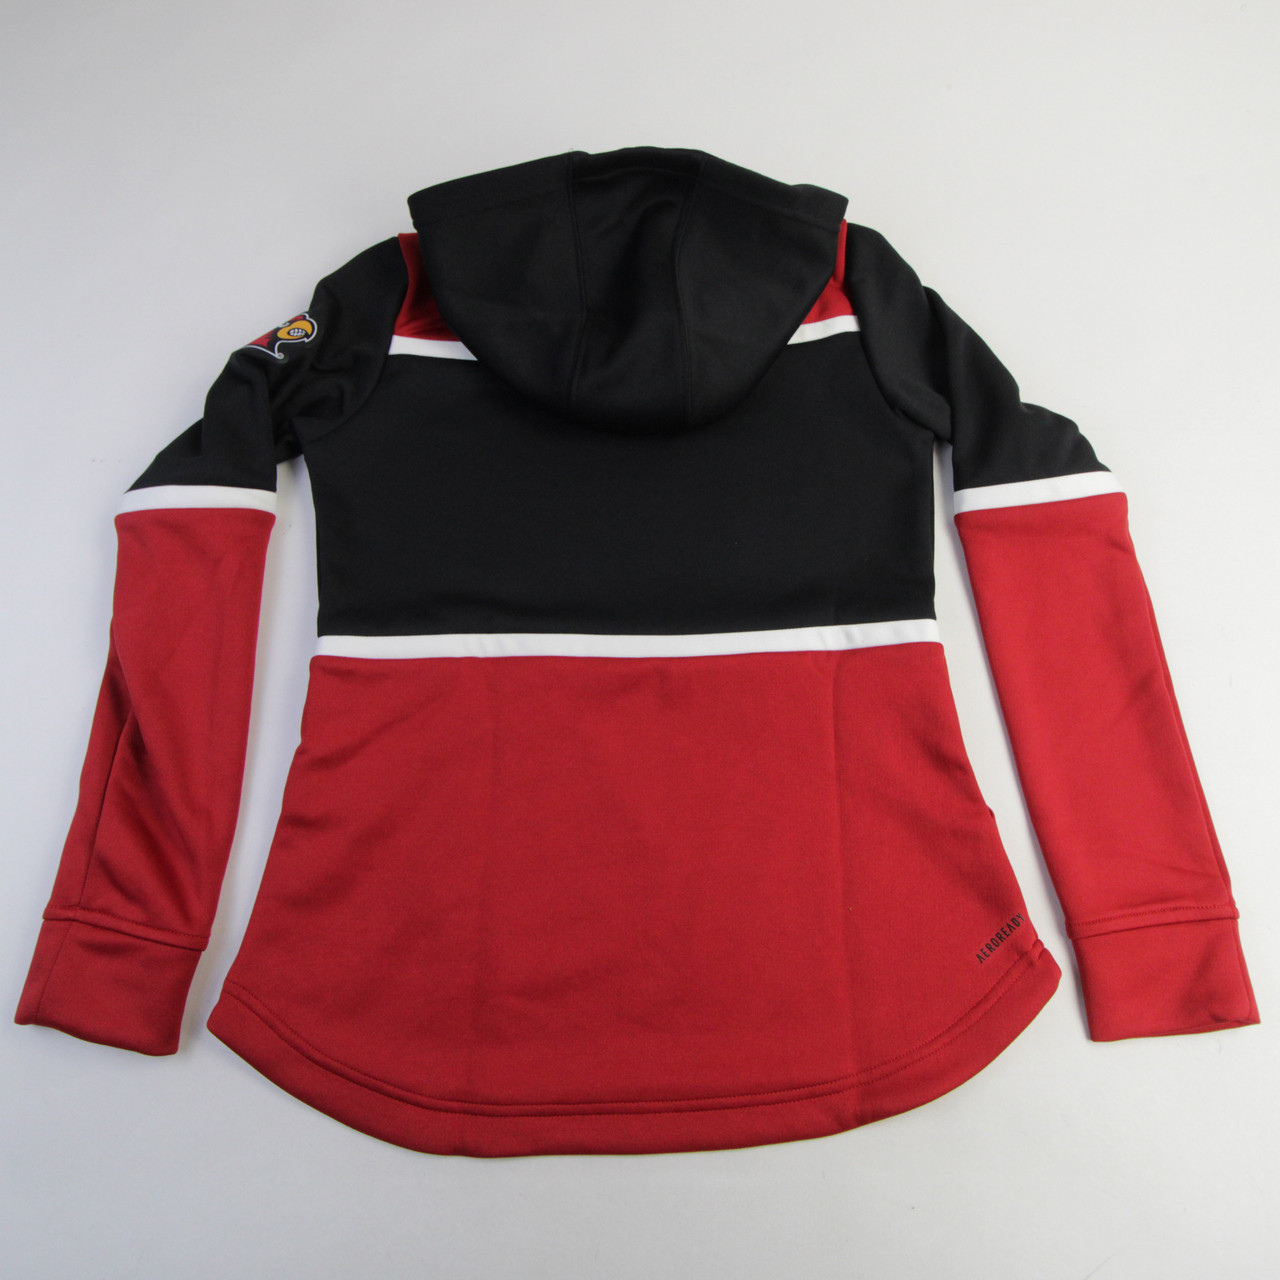 Louisville Cardinals adidas Sweatshirt Women's Red New